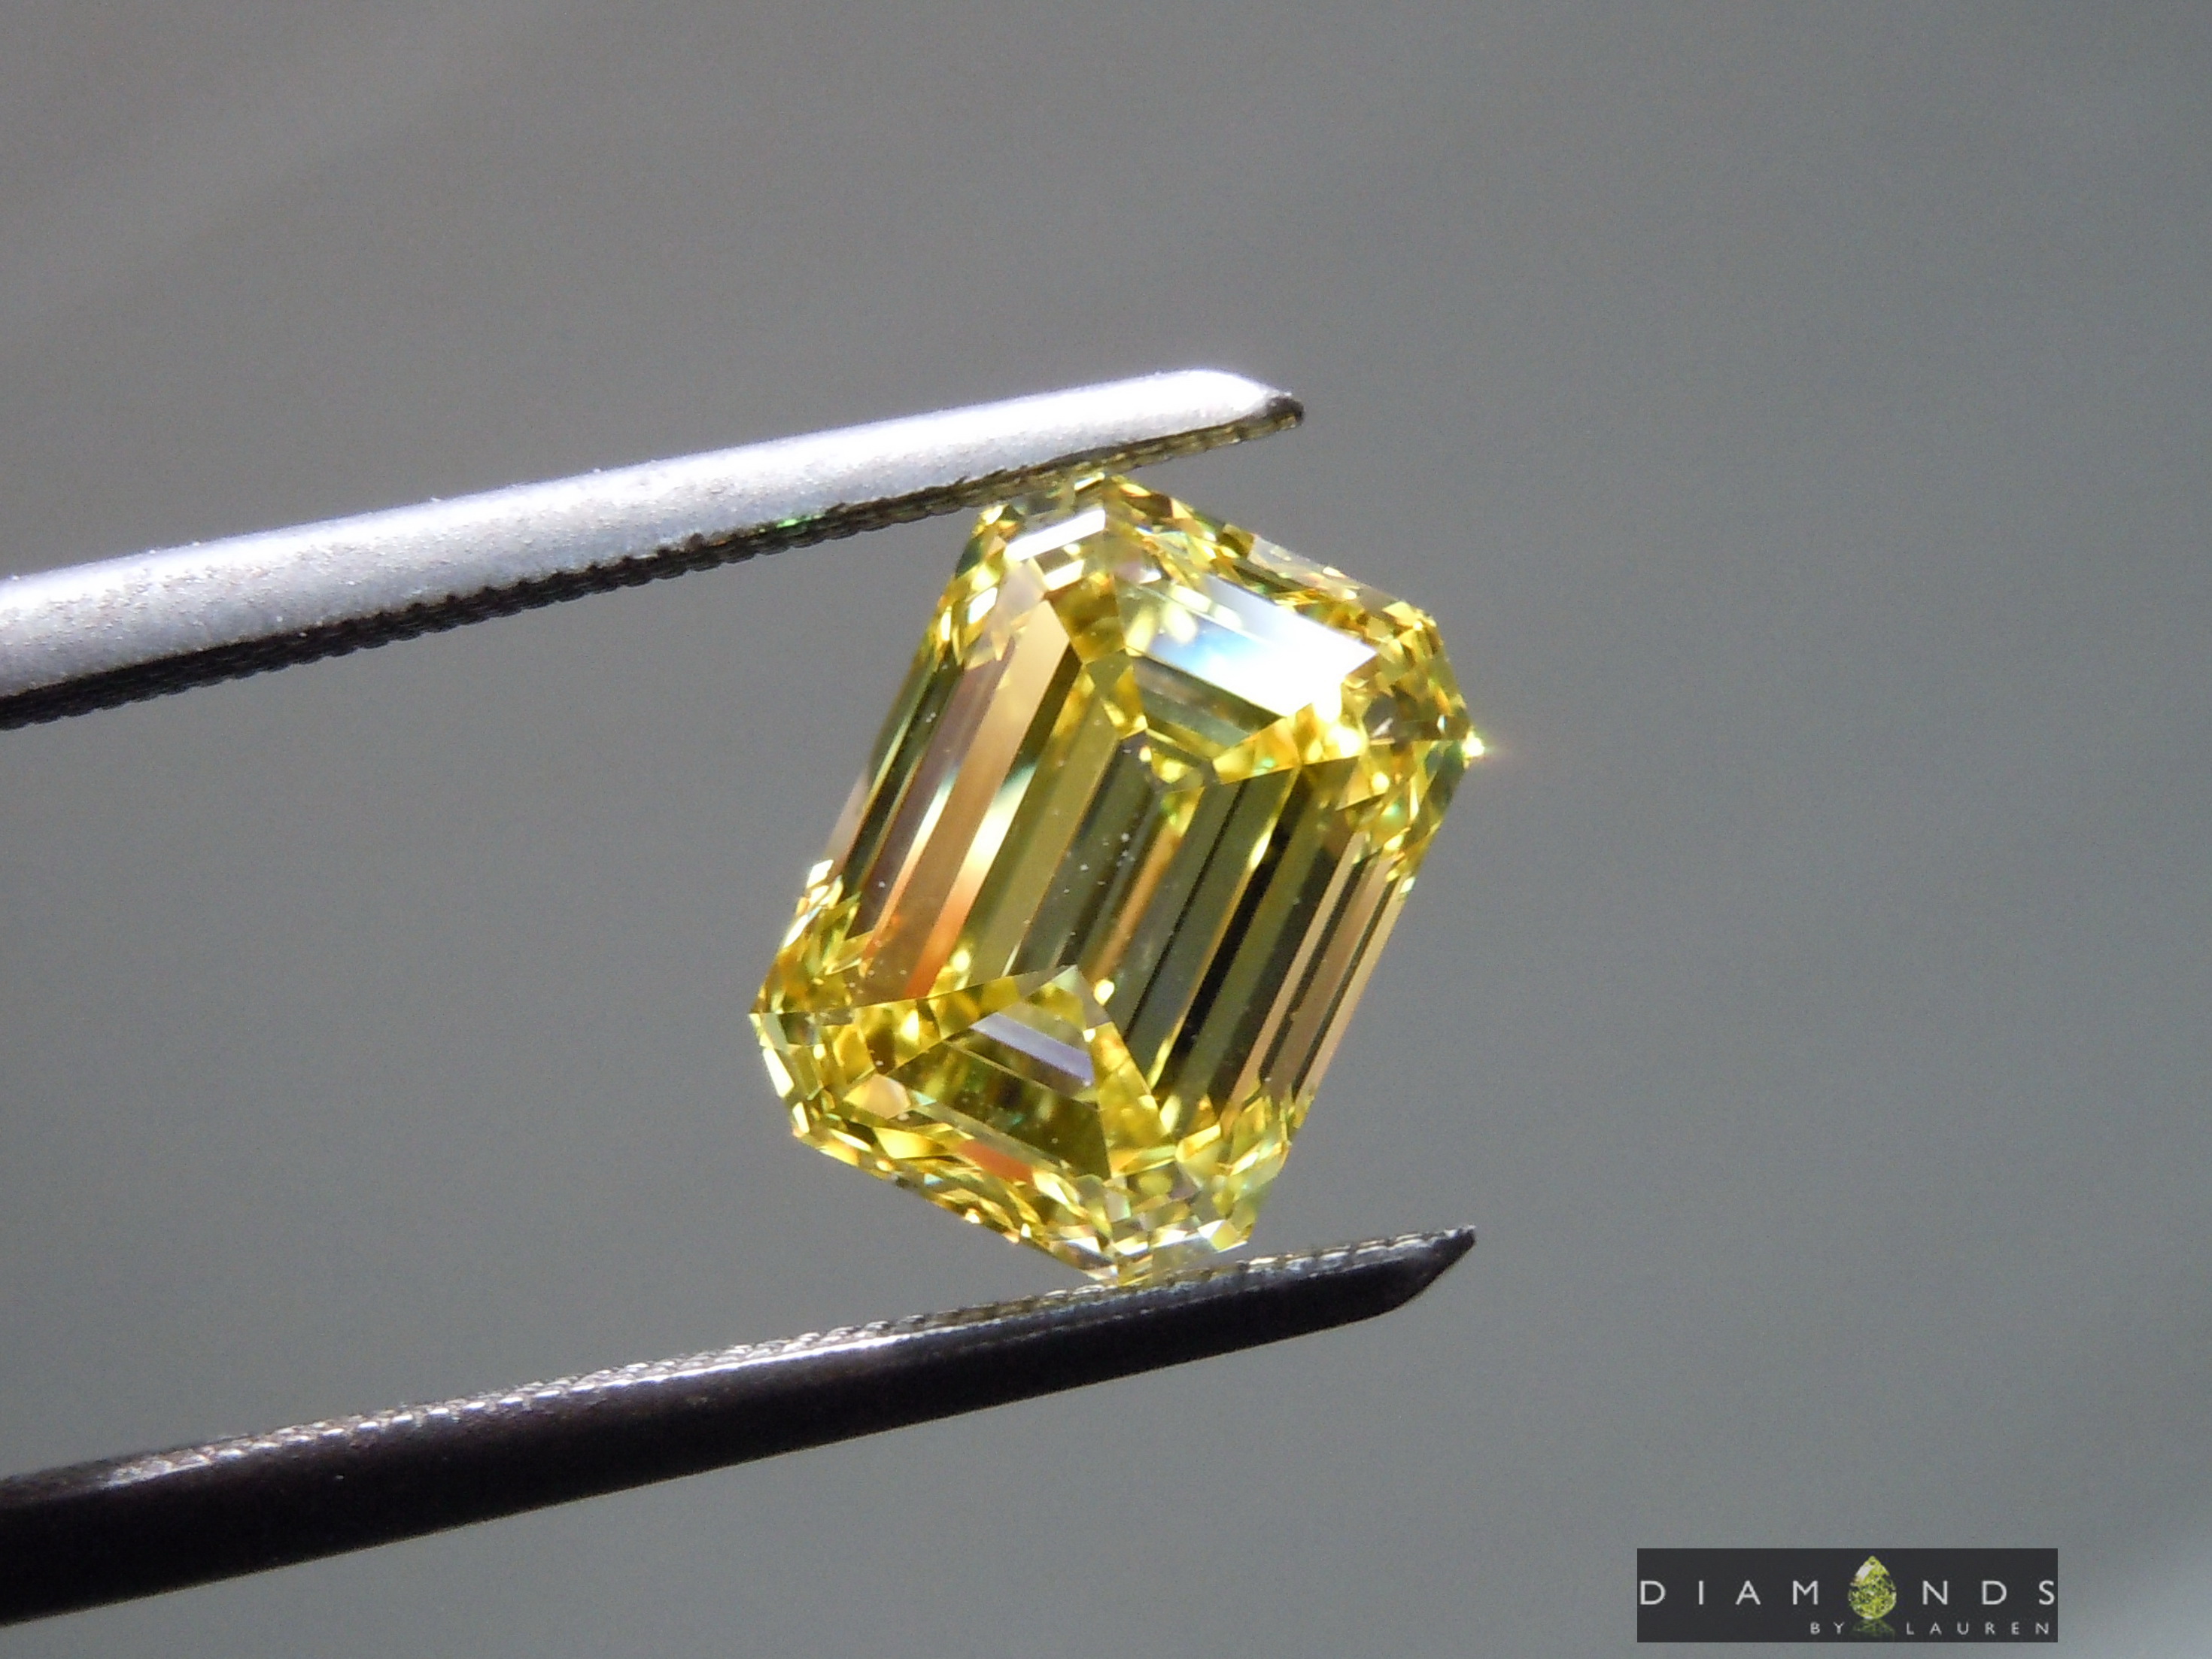 Authentic K18YG Diamond Ring 0.28CT #260-006-178-6387 | eBay